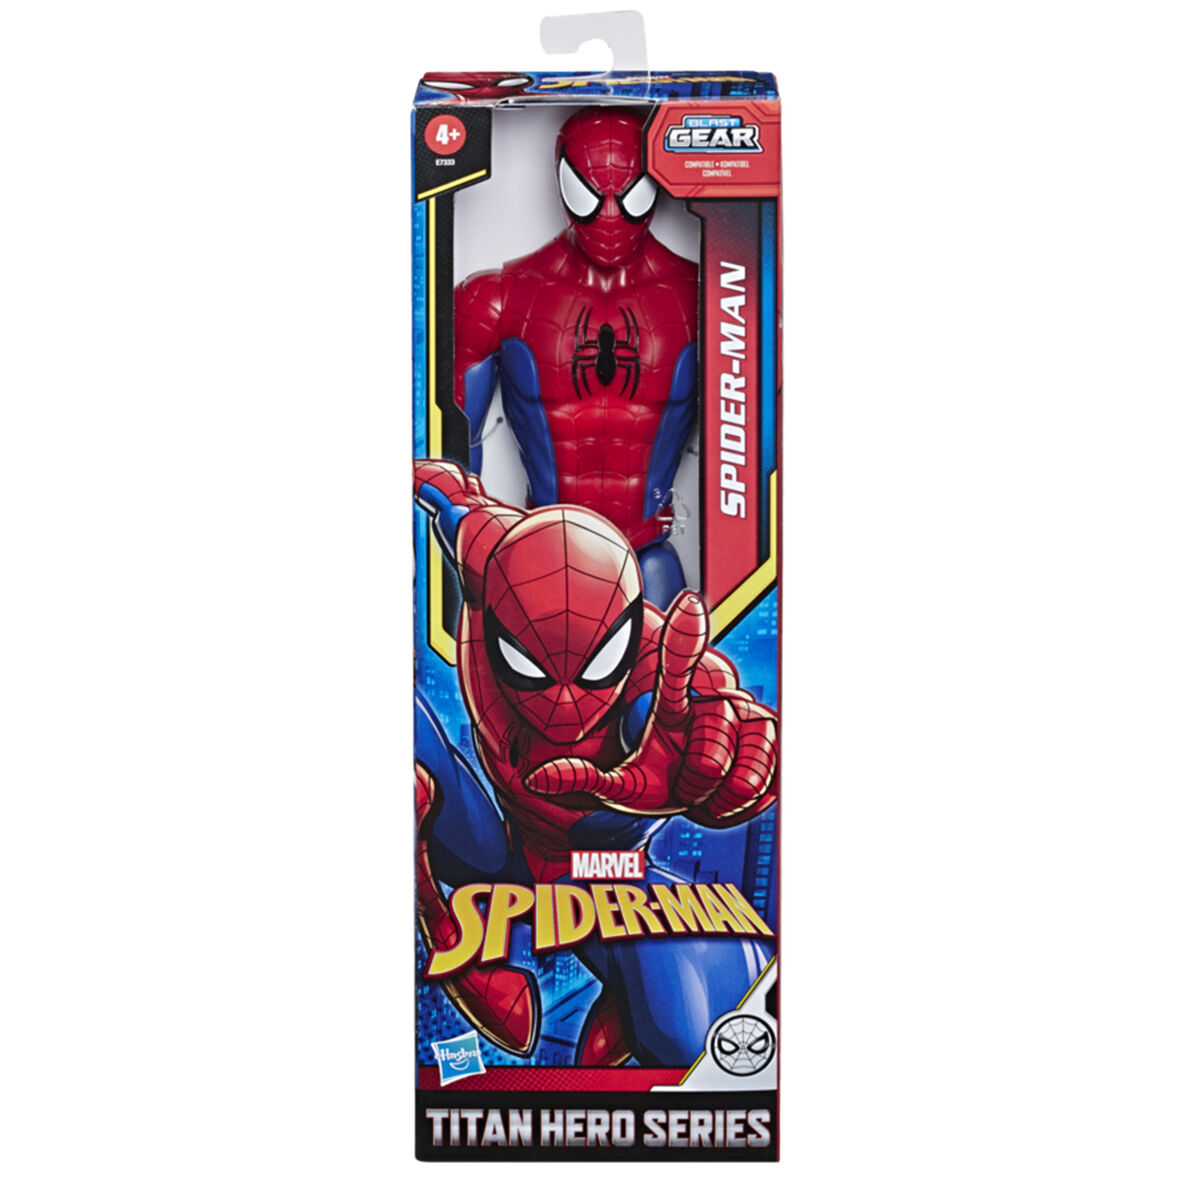 Titan Hero Spiderman